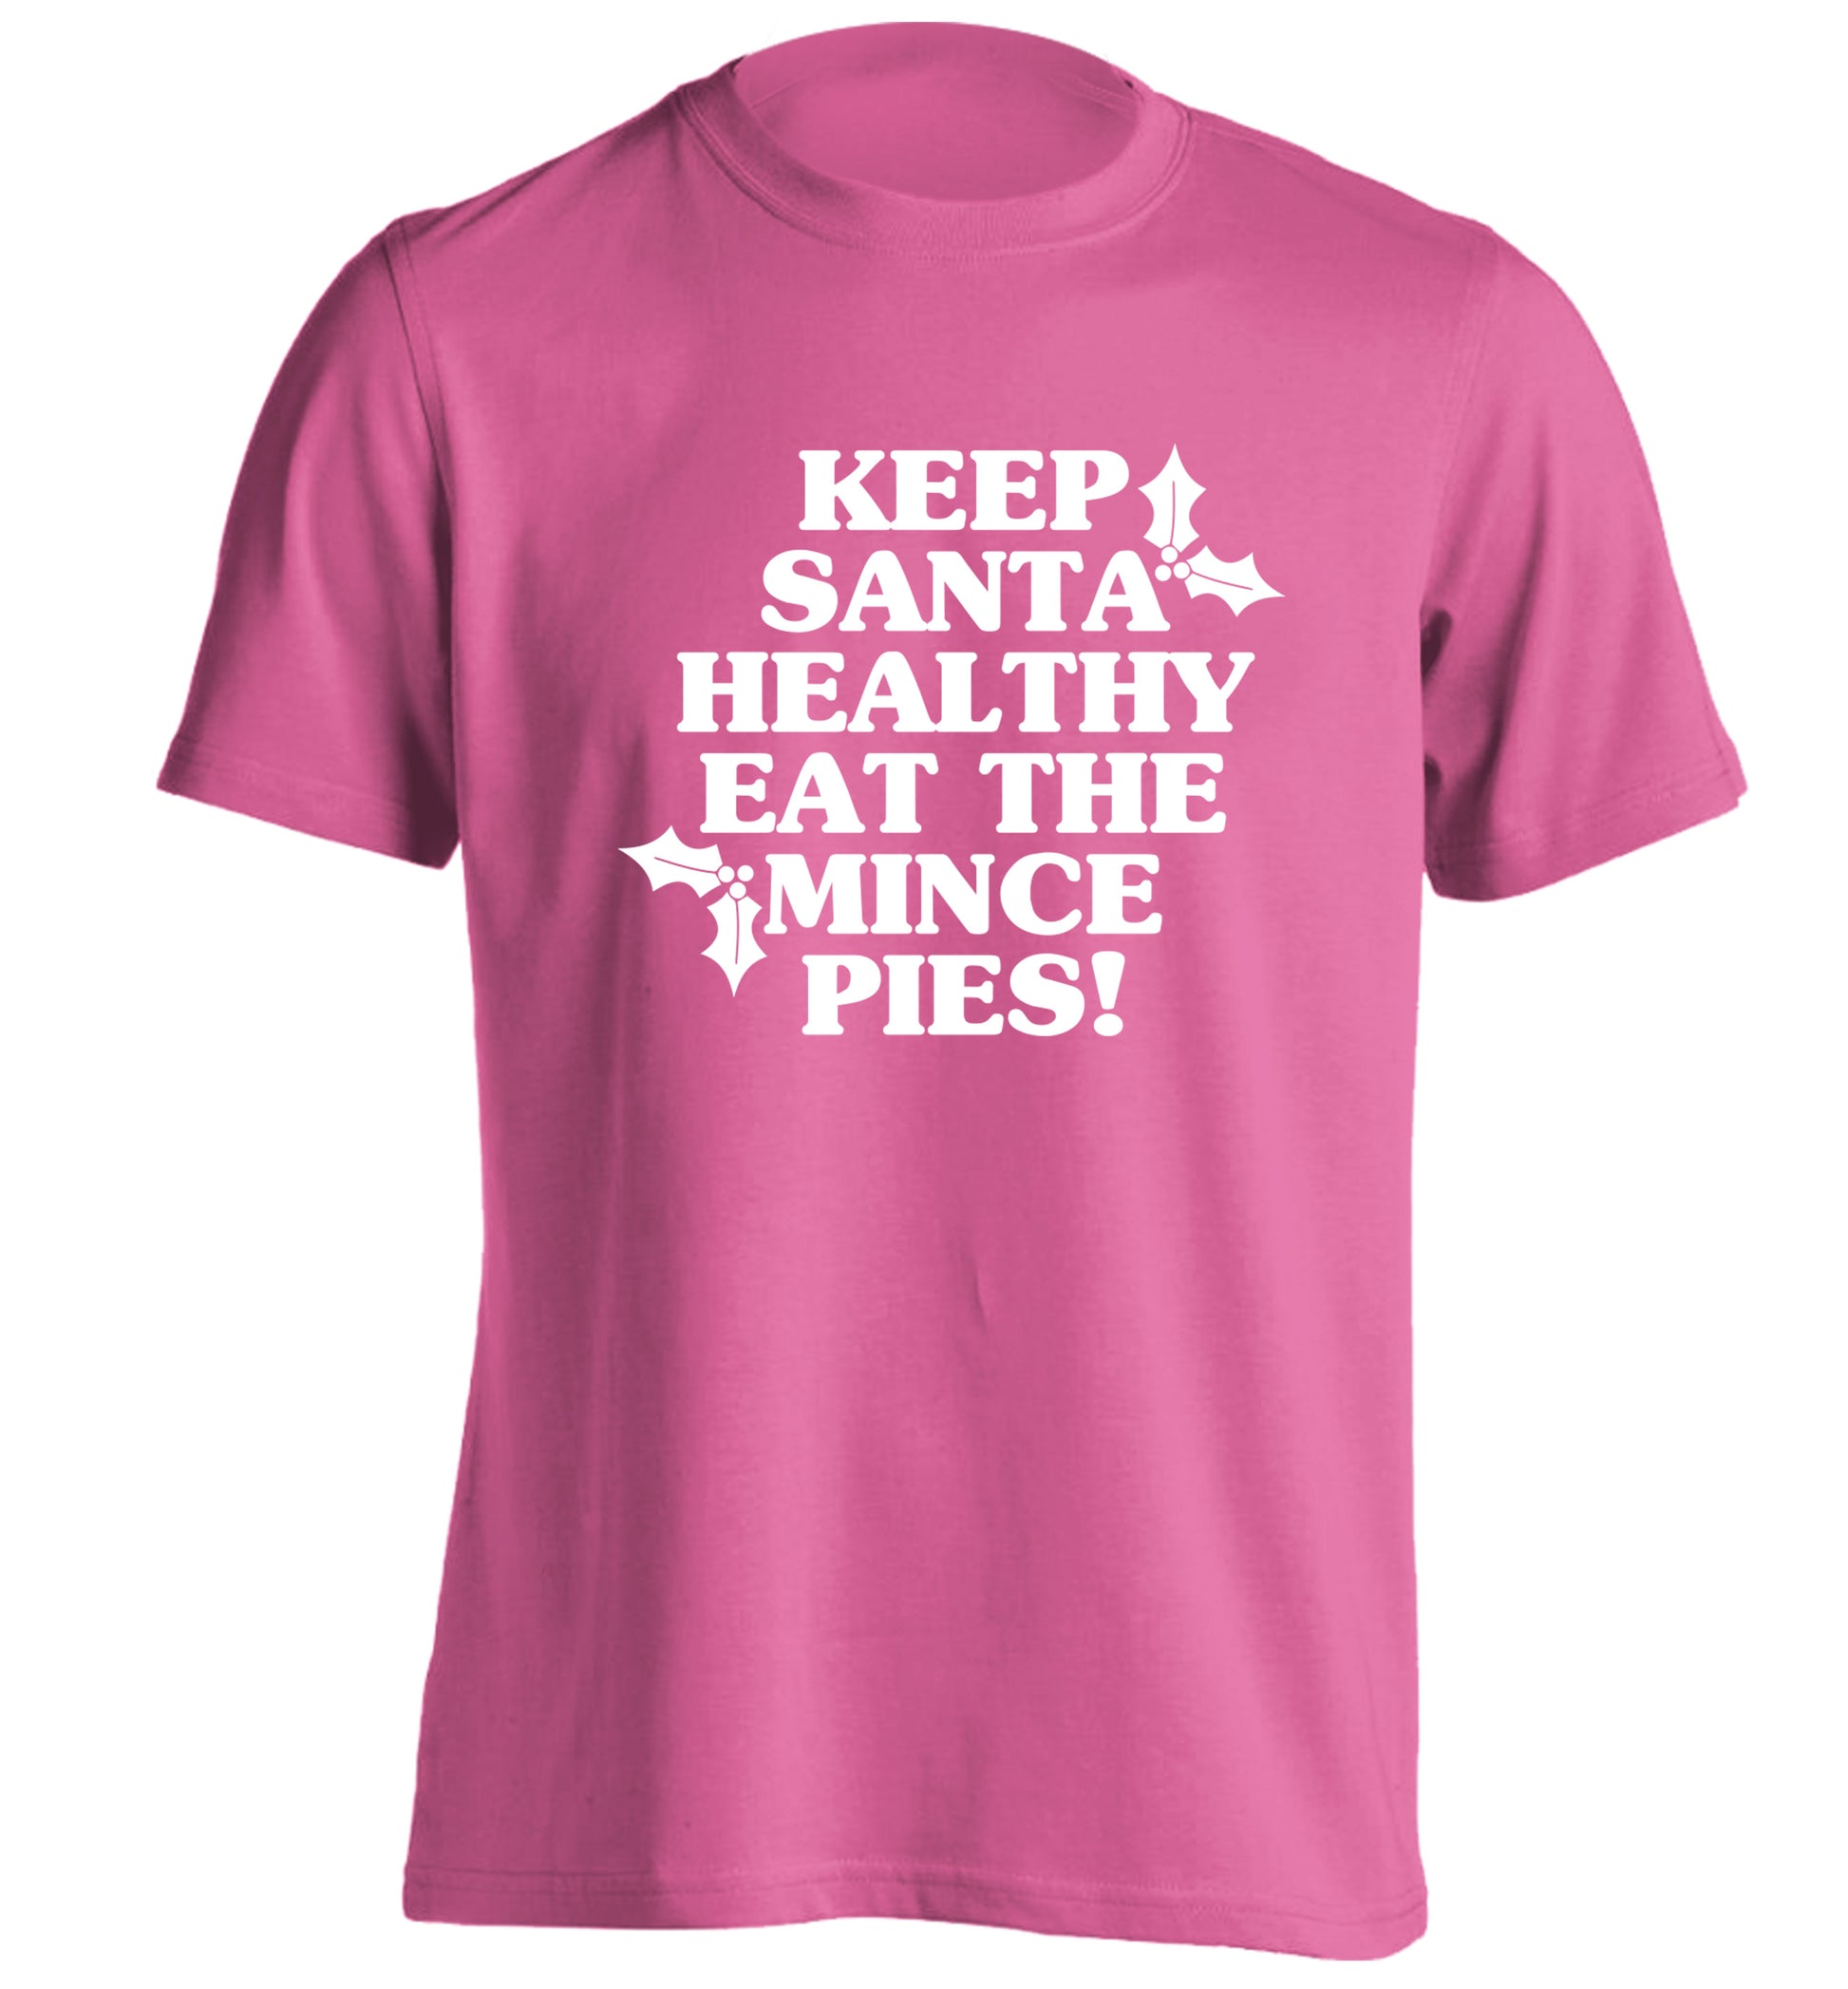 Keep santa healthy eat the mince pies adults unisex pink Tshirt 2XL